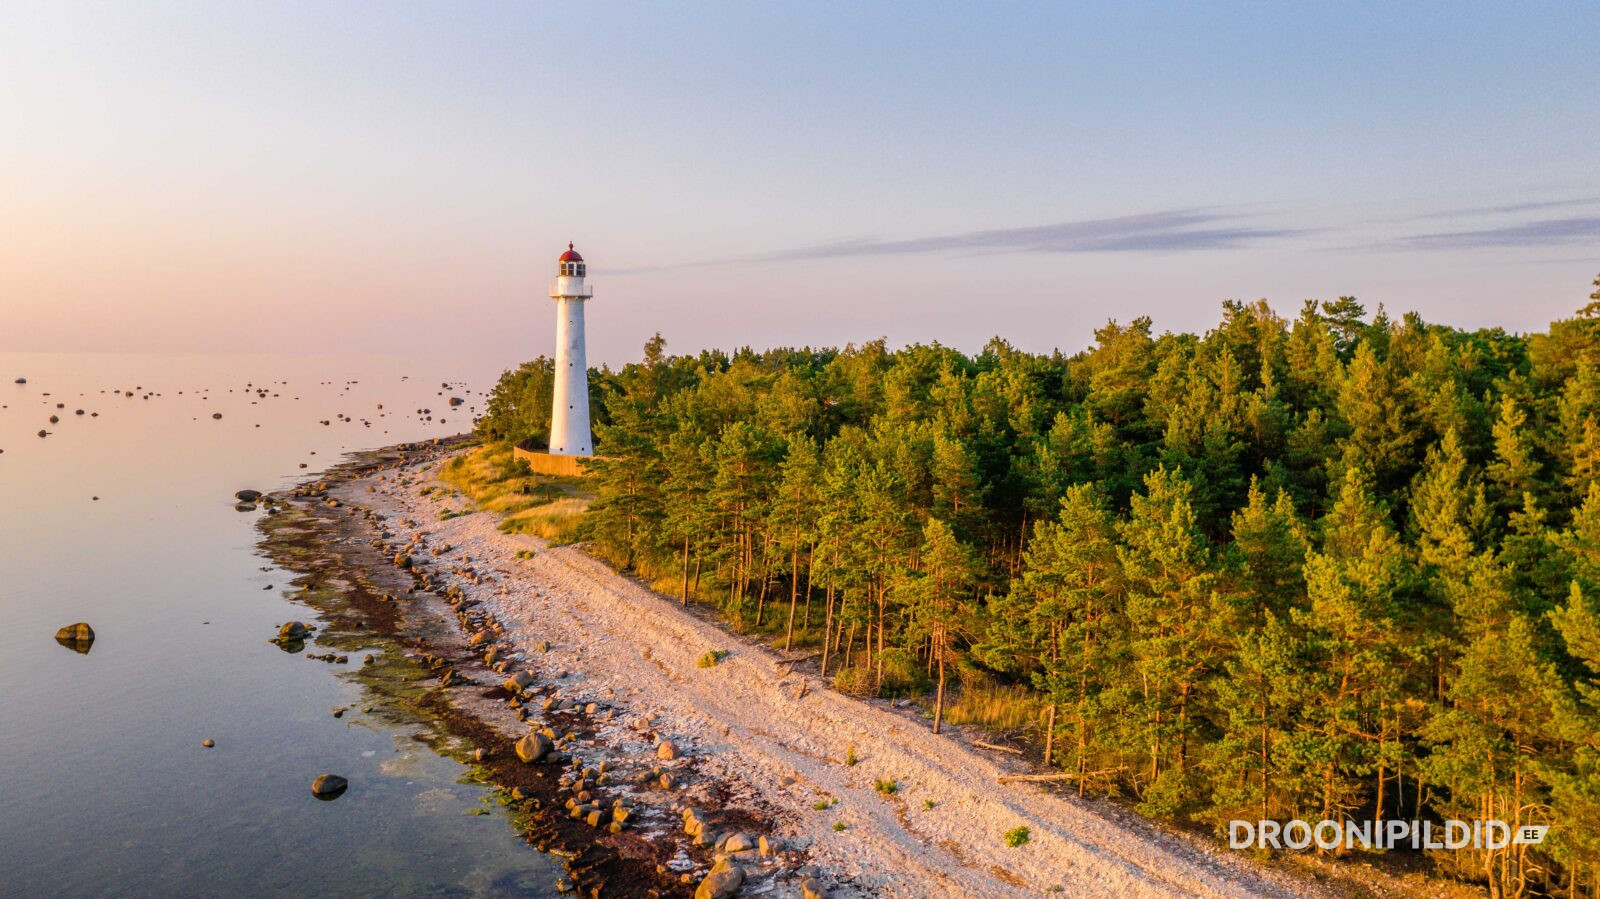 Eesti saared, Eesti, Saxby tuletorn, Läänemaa, Saxby lighthouse, Saxby majakas, suvi, Vormsi, Vorsmi saar, Vormsi sadam